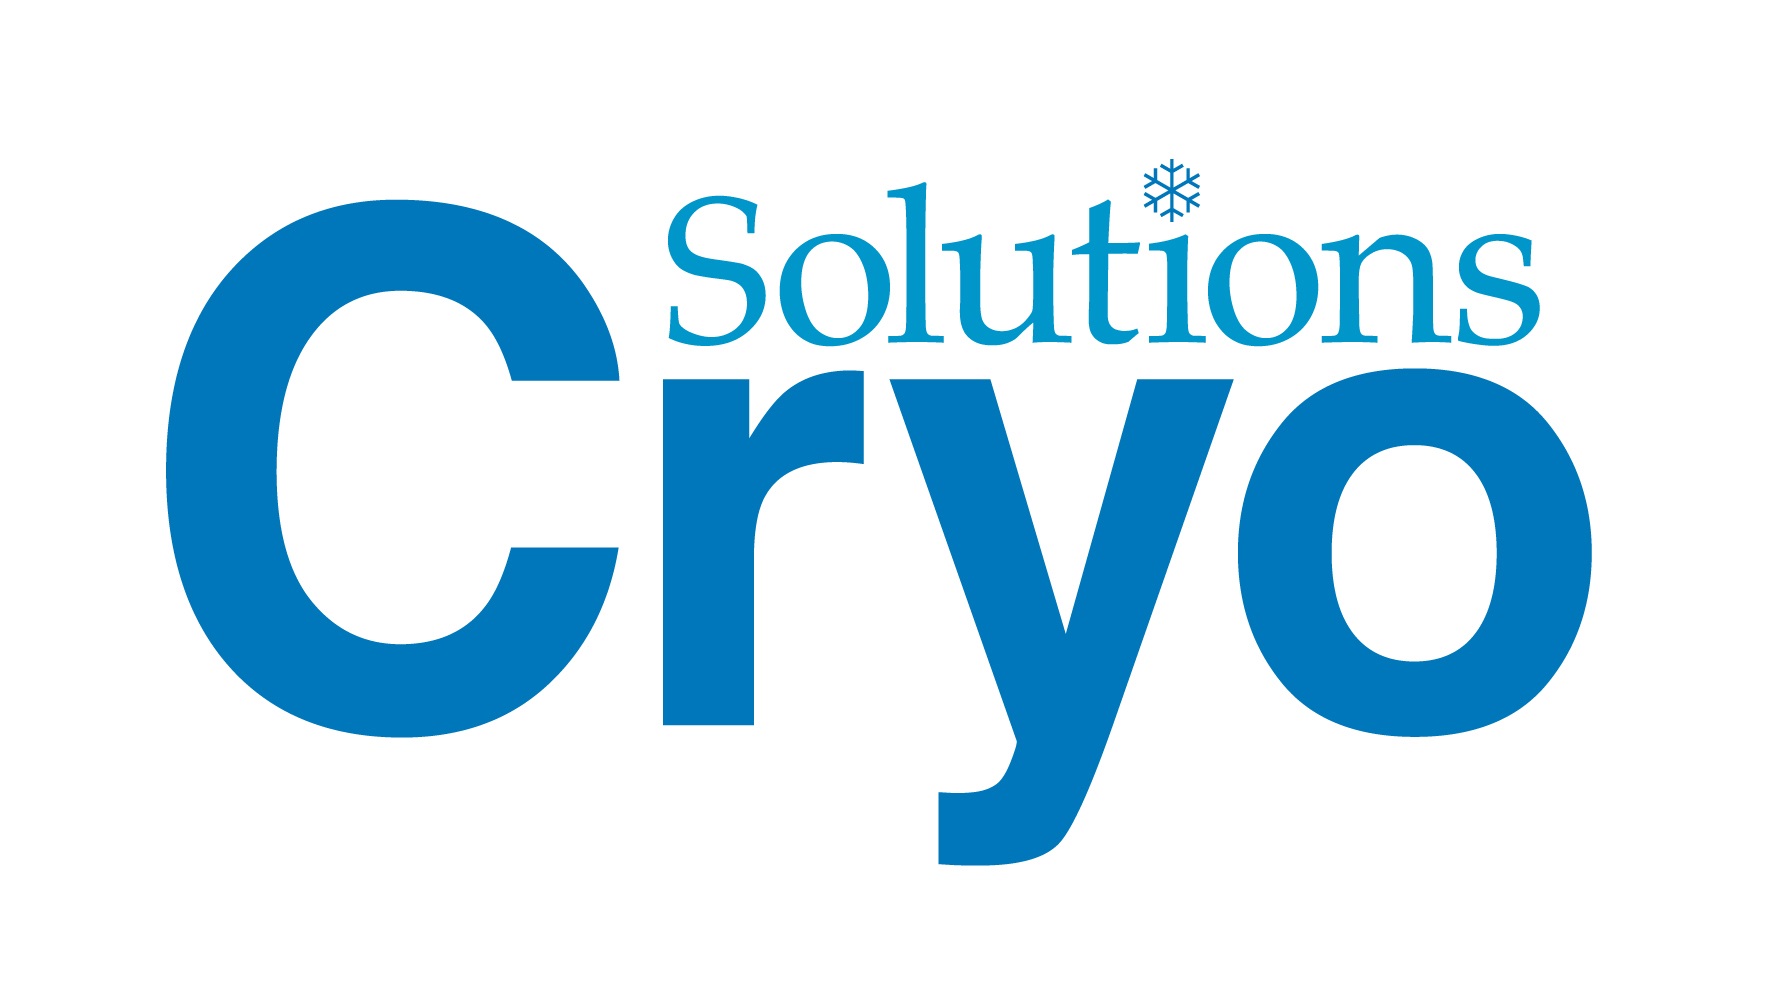 Cryo Solutions